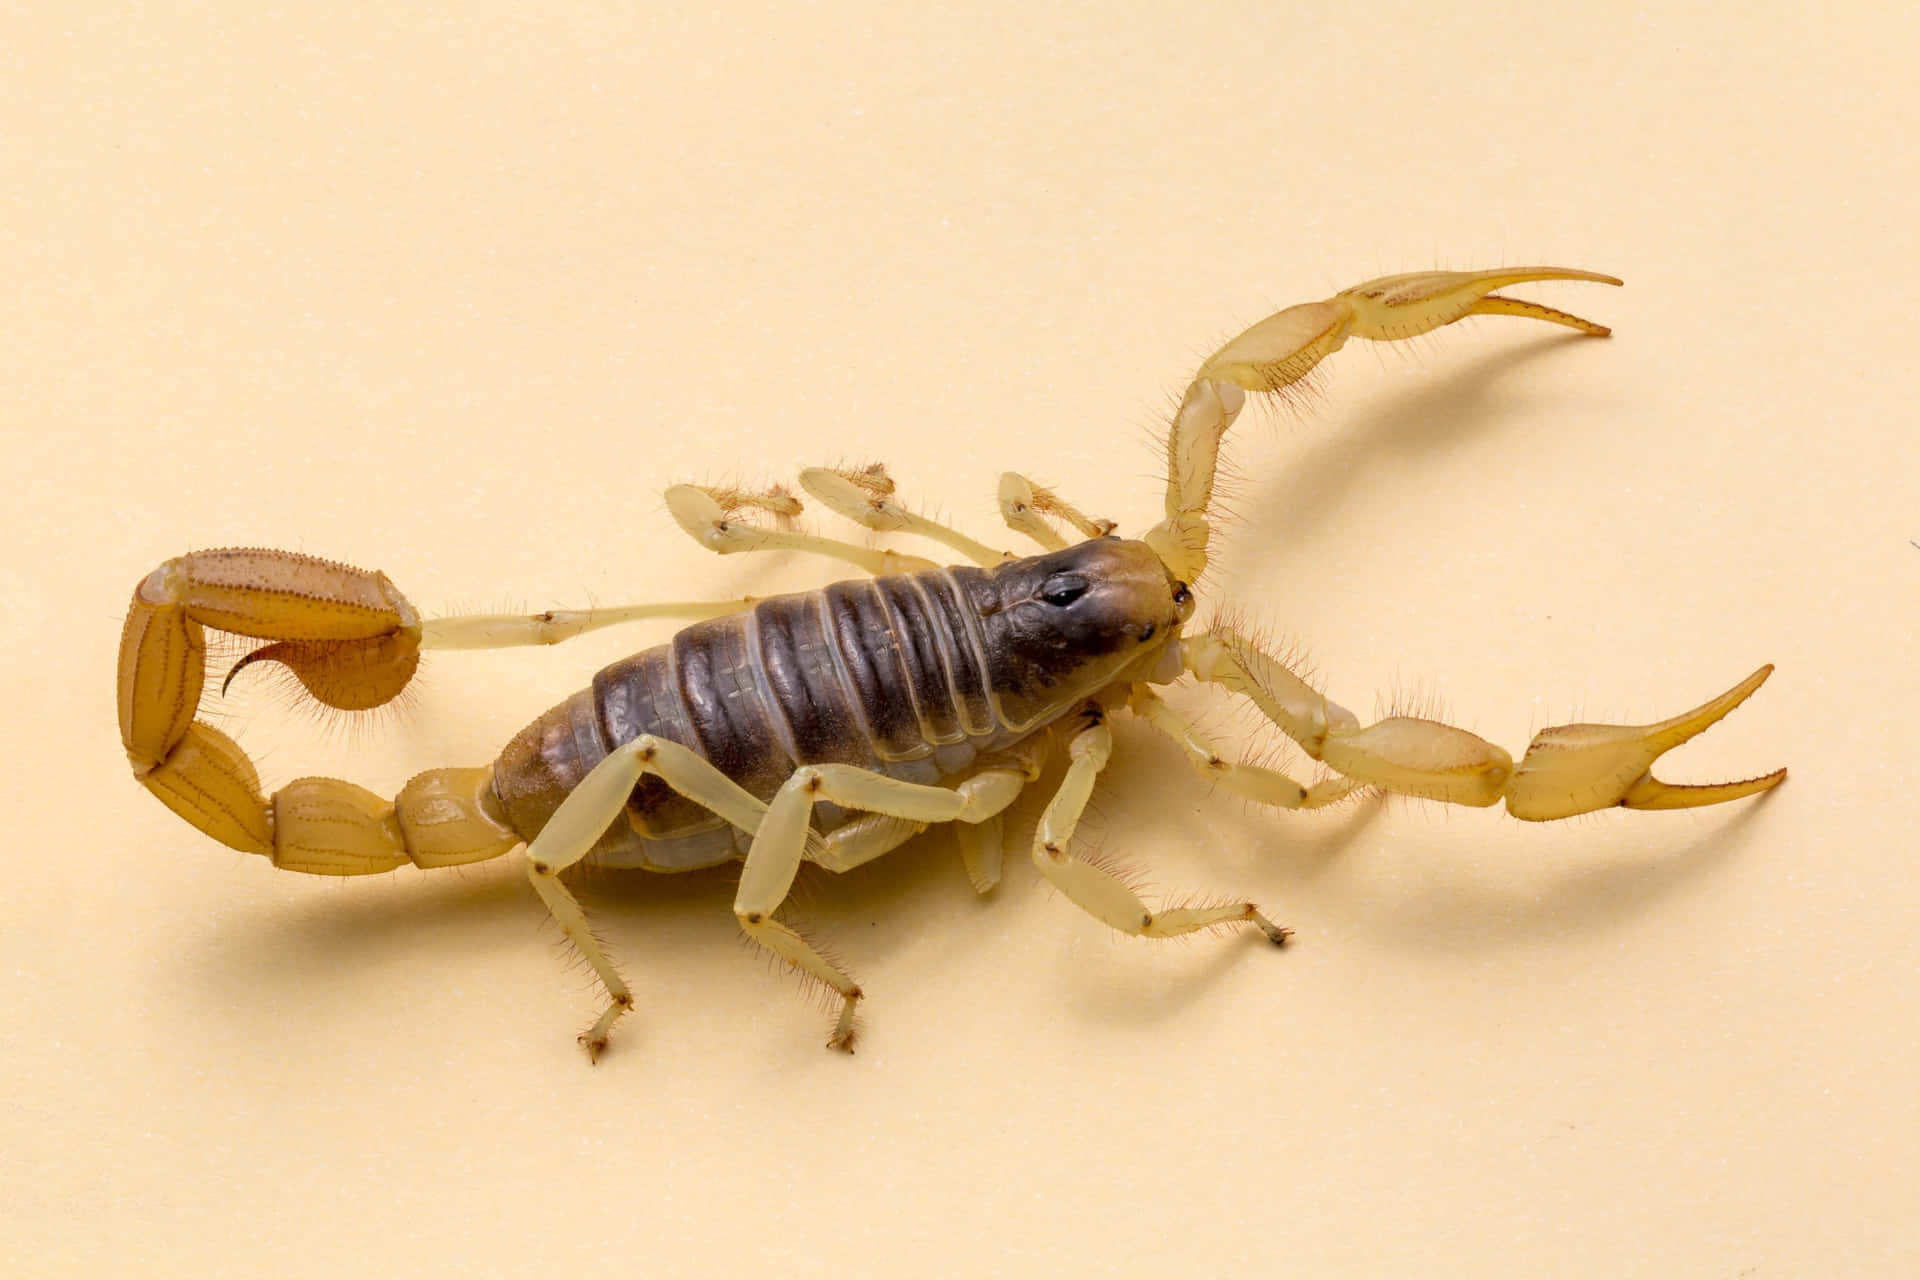 A Closeup of a Scorpion